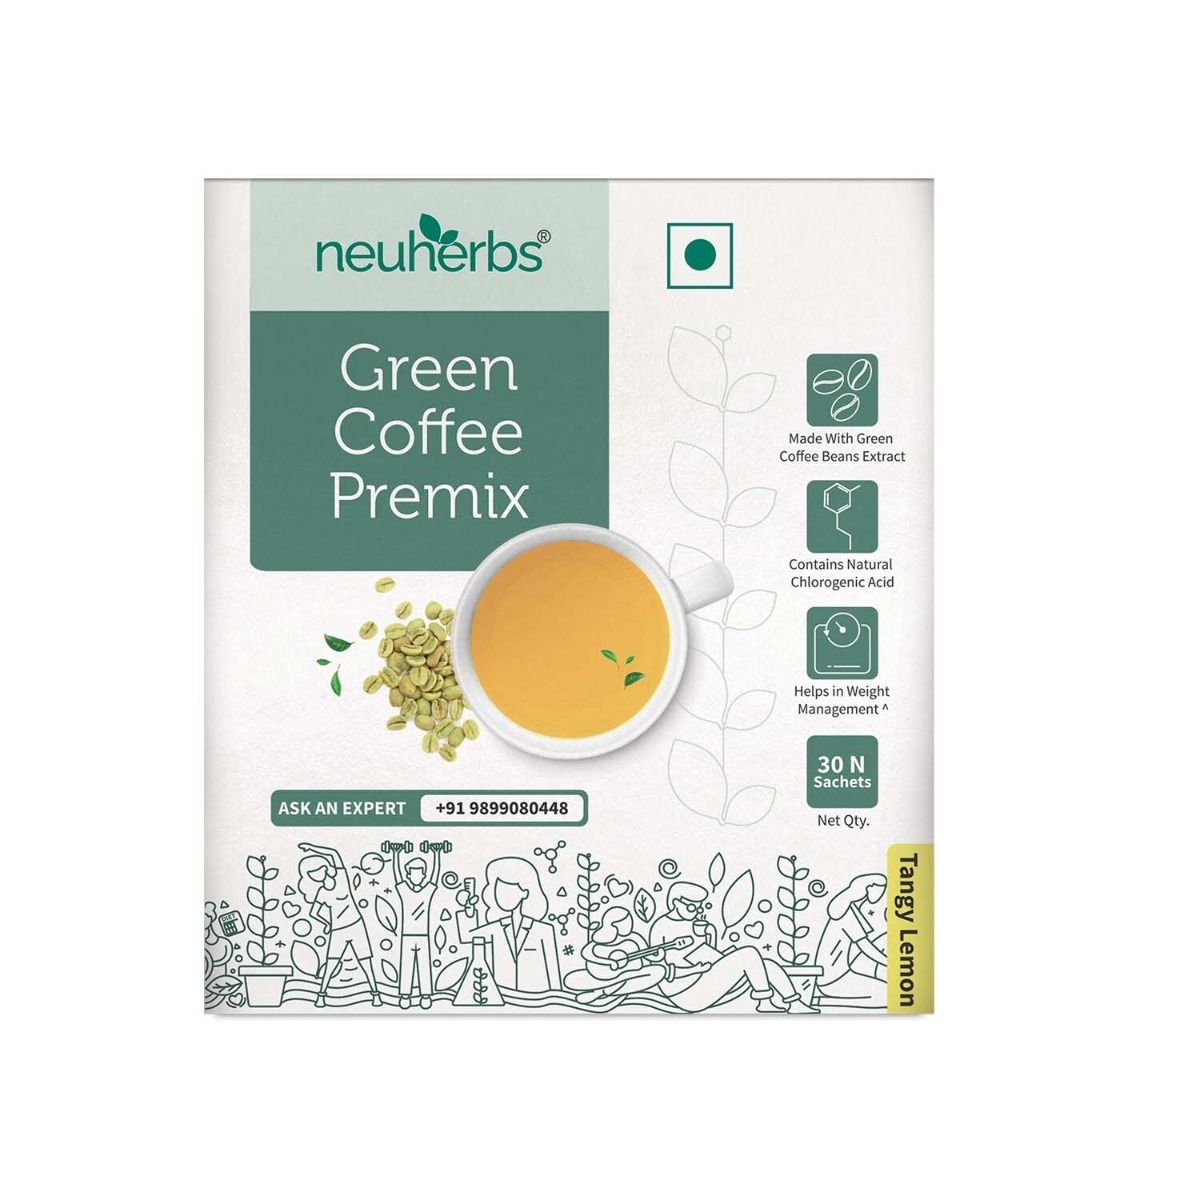 Neuherbs Instant Green Coffee Premix Tangy Lemon Flavour Powder, 30 Sachets, Pack of 1 